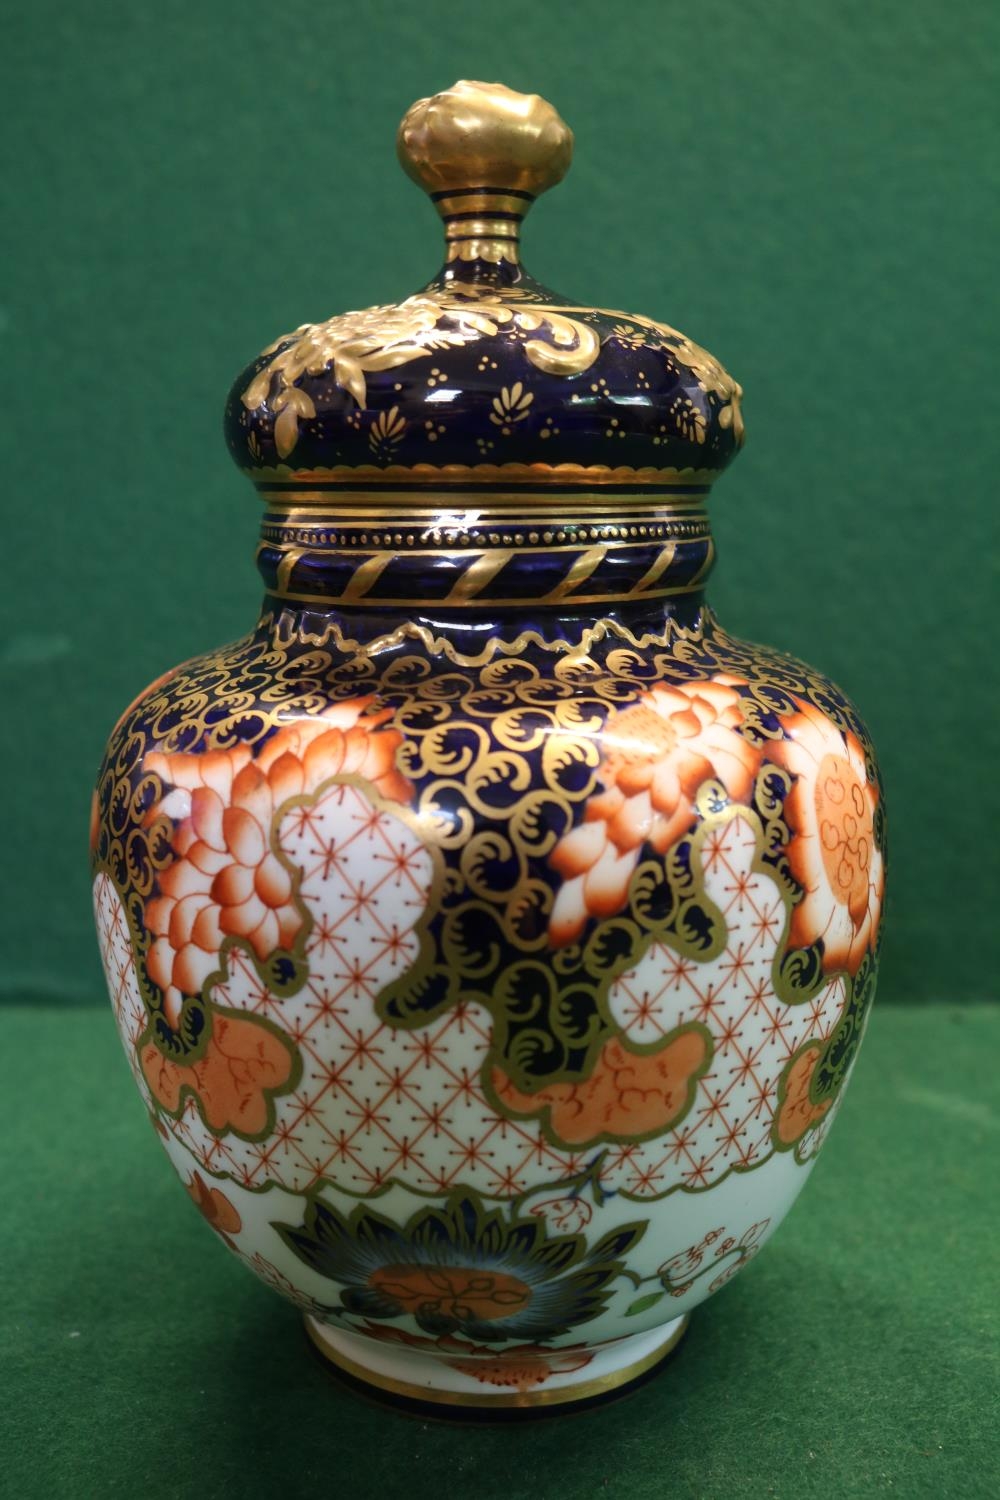 Royal Crown Derby late 19th century Cobalt Blue and Gilt large Imari pattern lidded urn style vase - Image 3 of 4